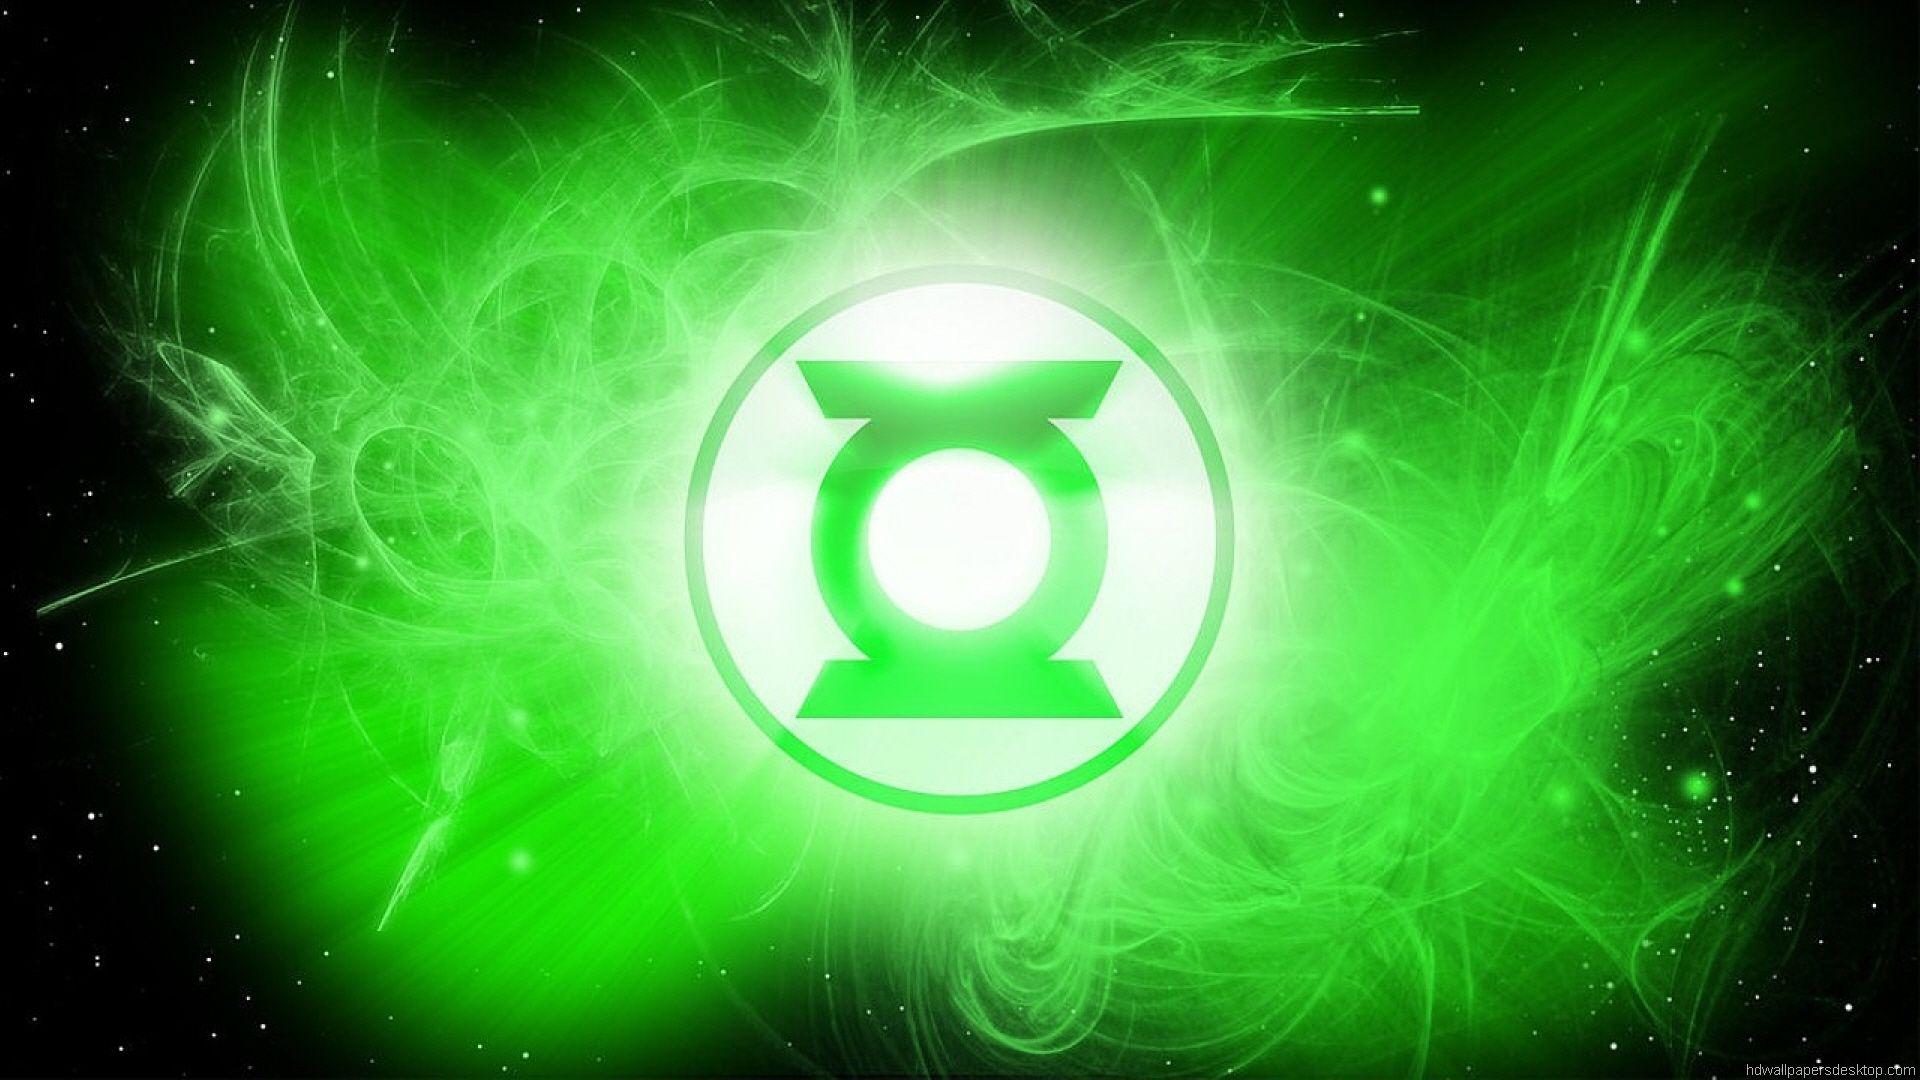 Cool Green Logo - Cool Green Lantern wallpaper | 1920x1080 | #27638